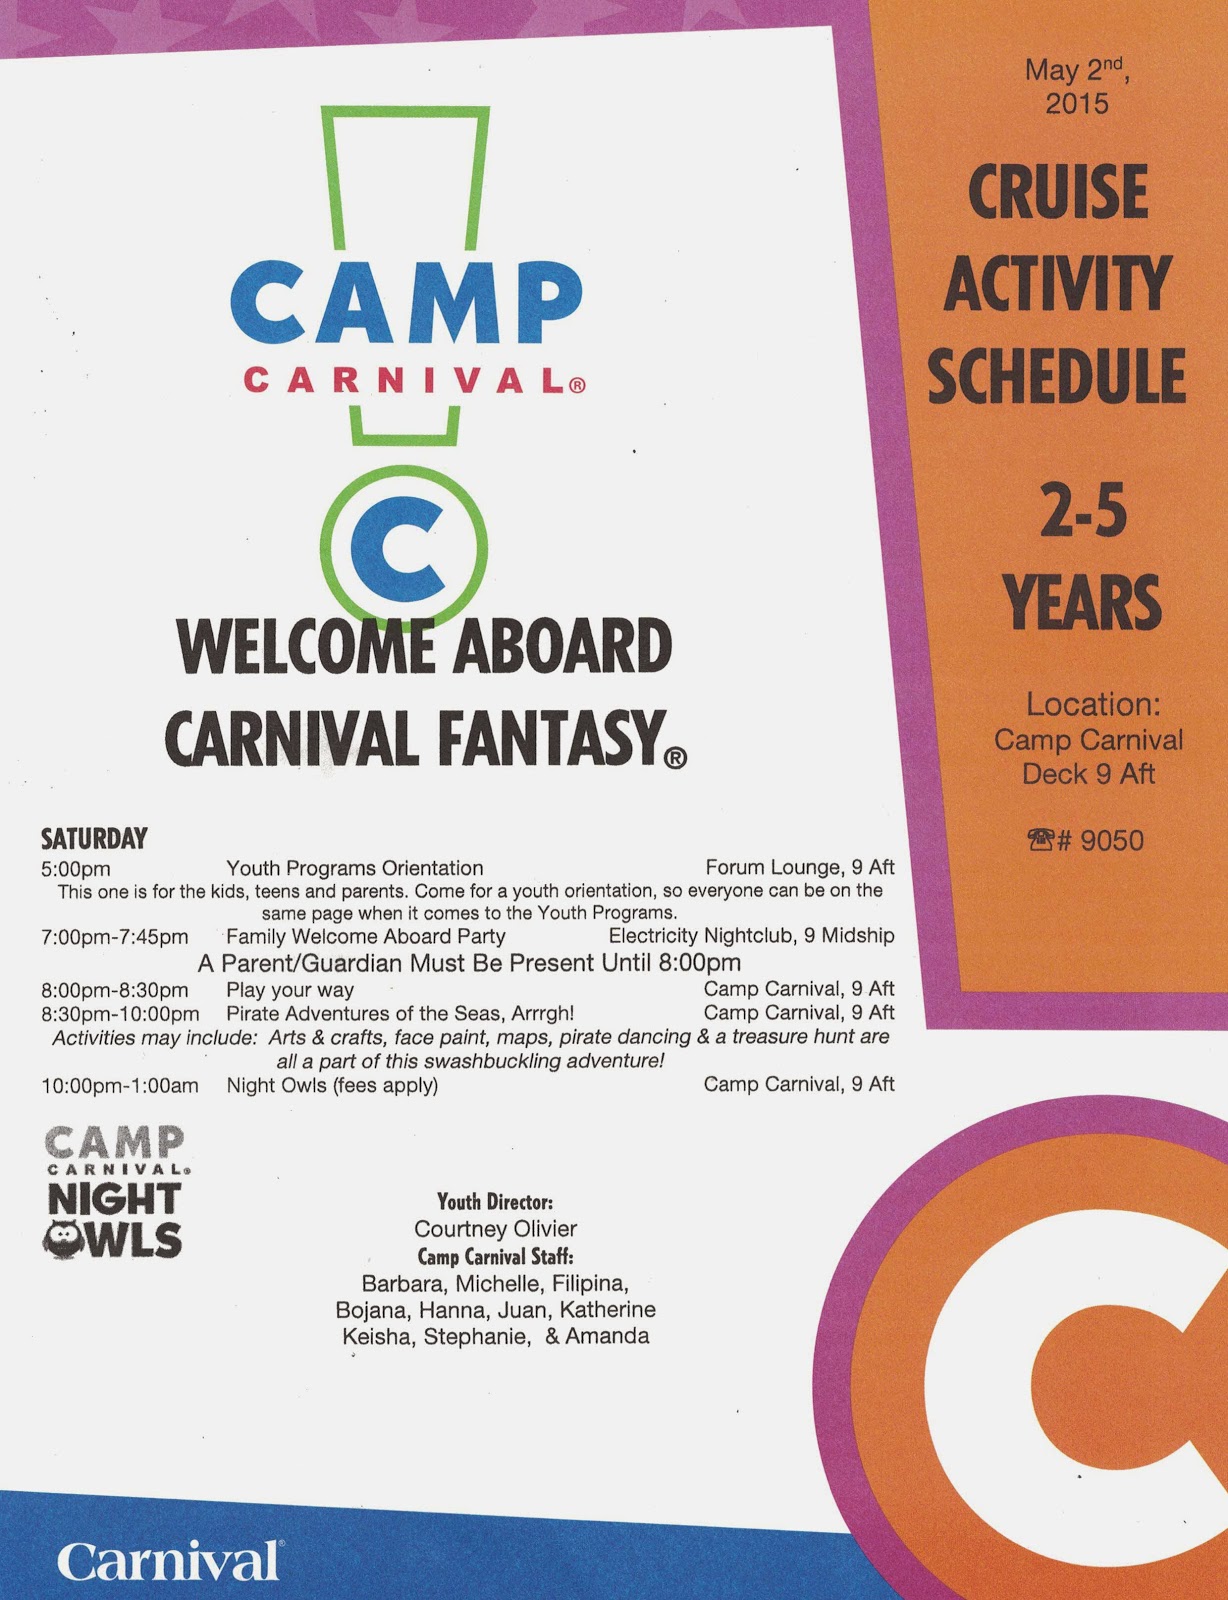 carnival cruise schedule sydney